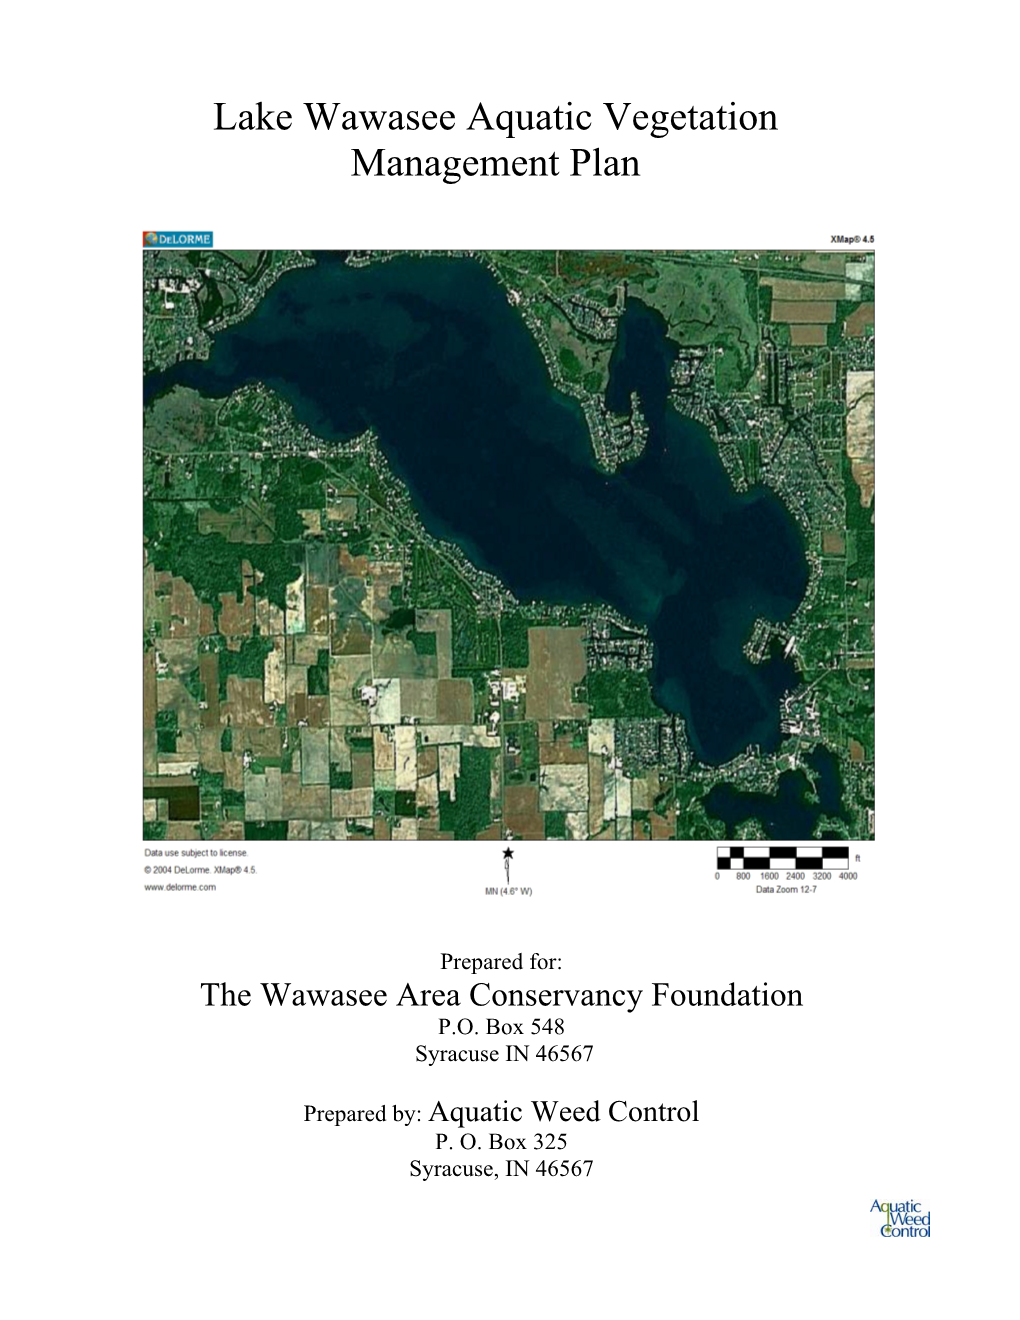 Lake Wawasee Aquatic Vegetation Management Plan